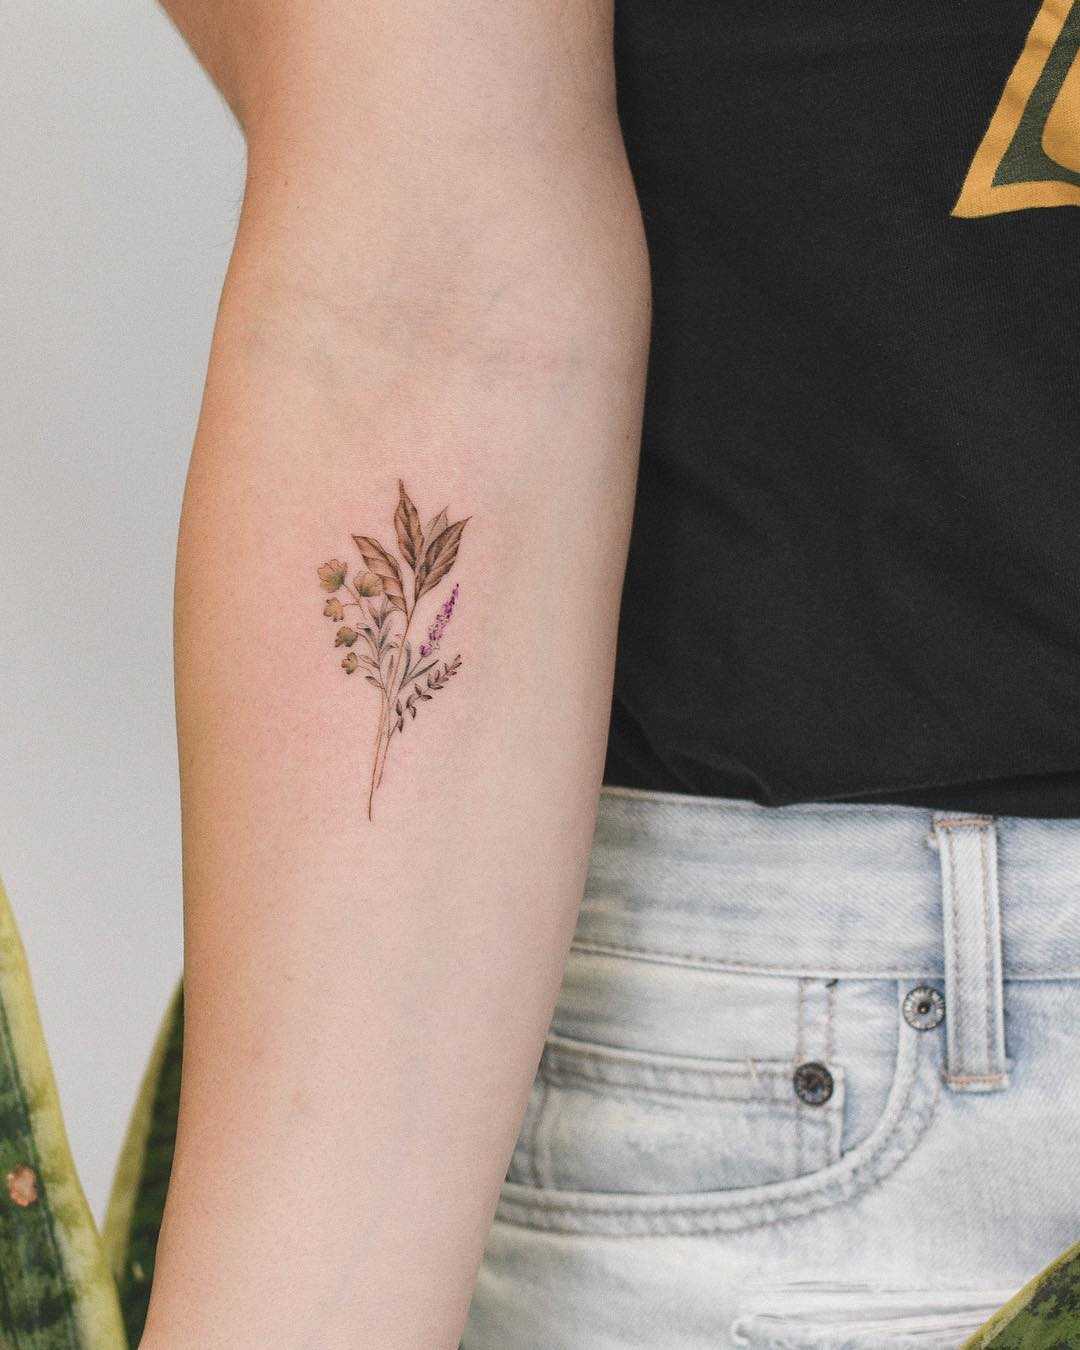 Coriander, rosemary, laurel and lavender tattoo